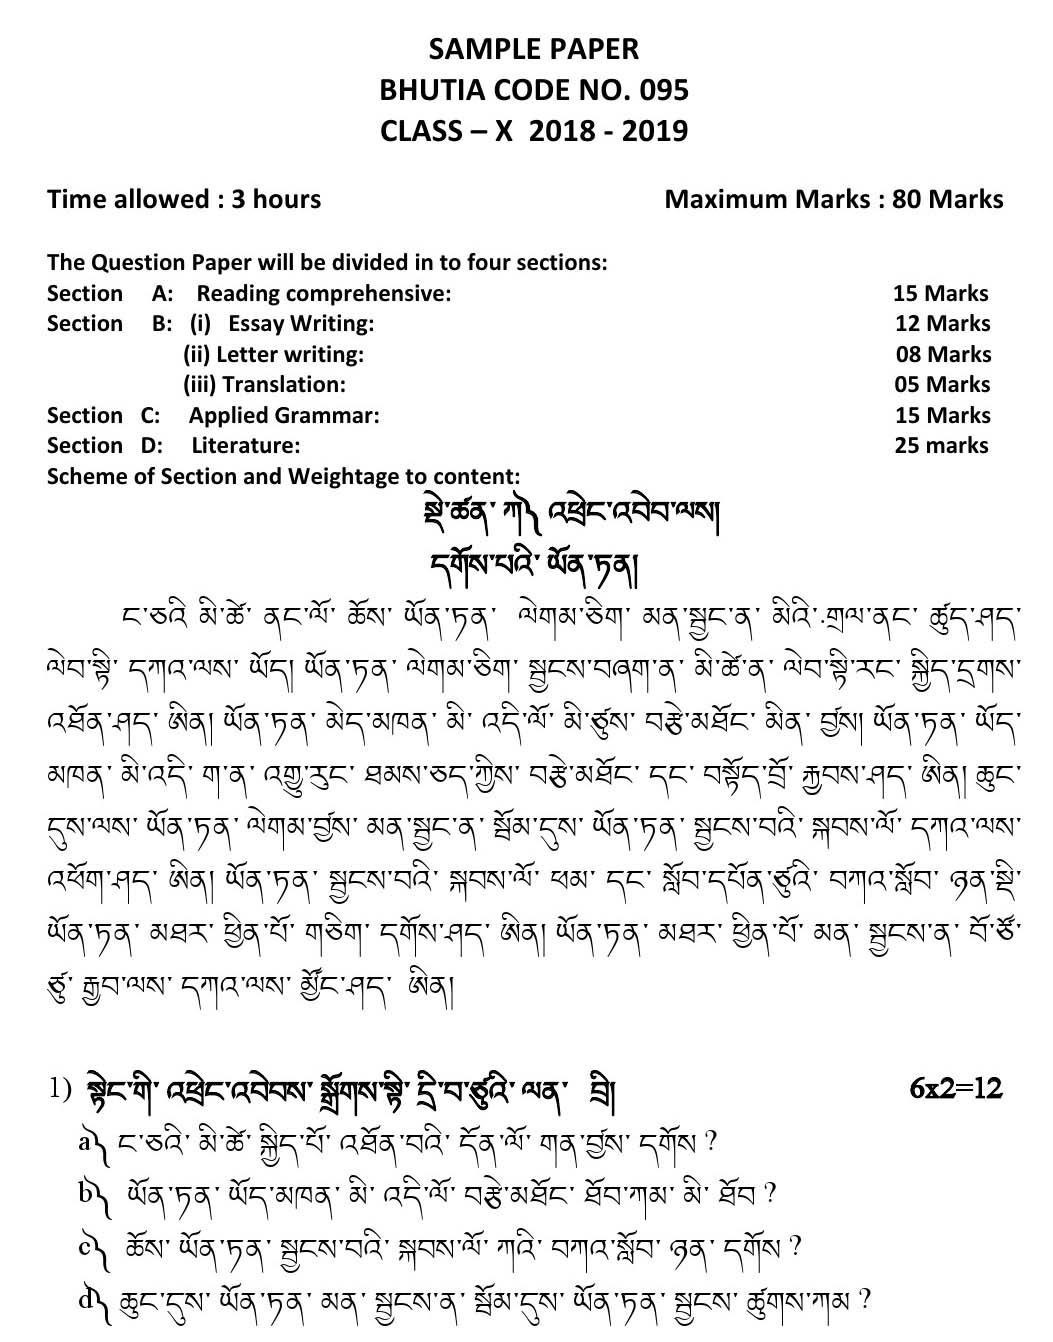 Bhutia CBSE Class X Sample Question Paper 2018-19 - Image 1